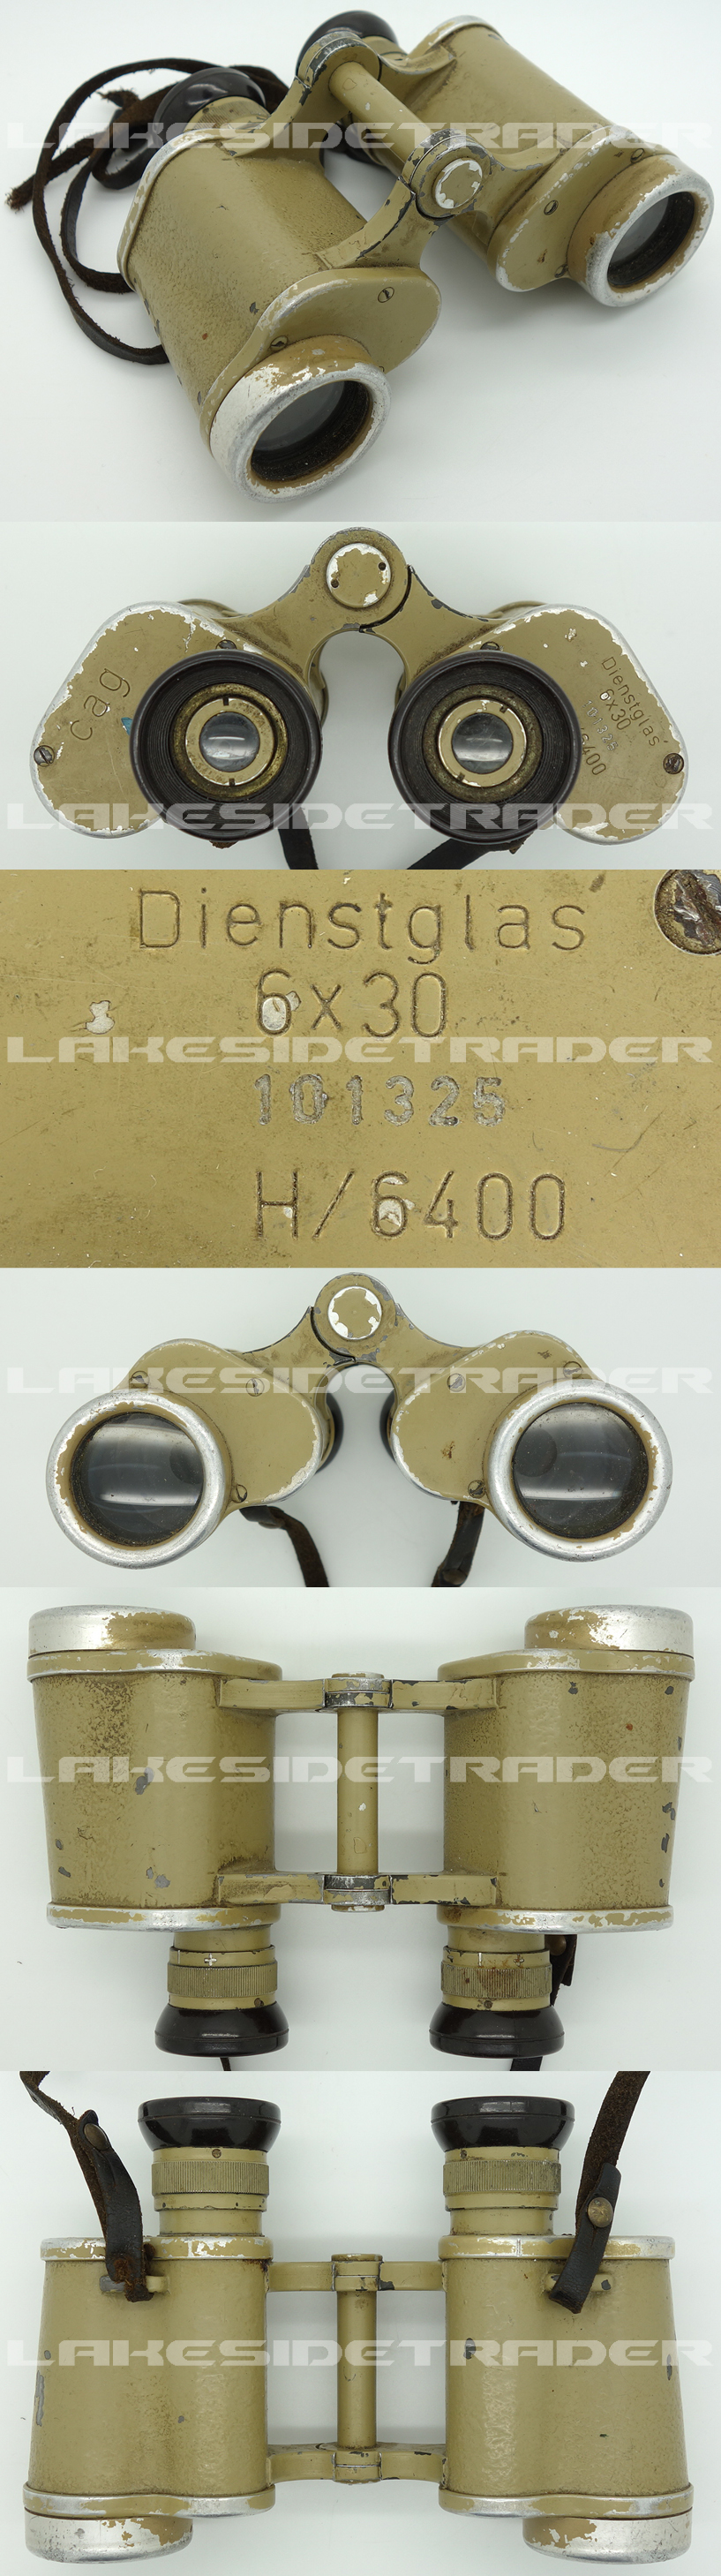 6X30 Power Issue Field Binoculars by cag